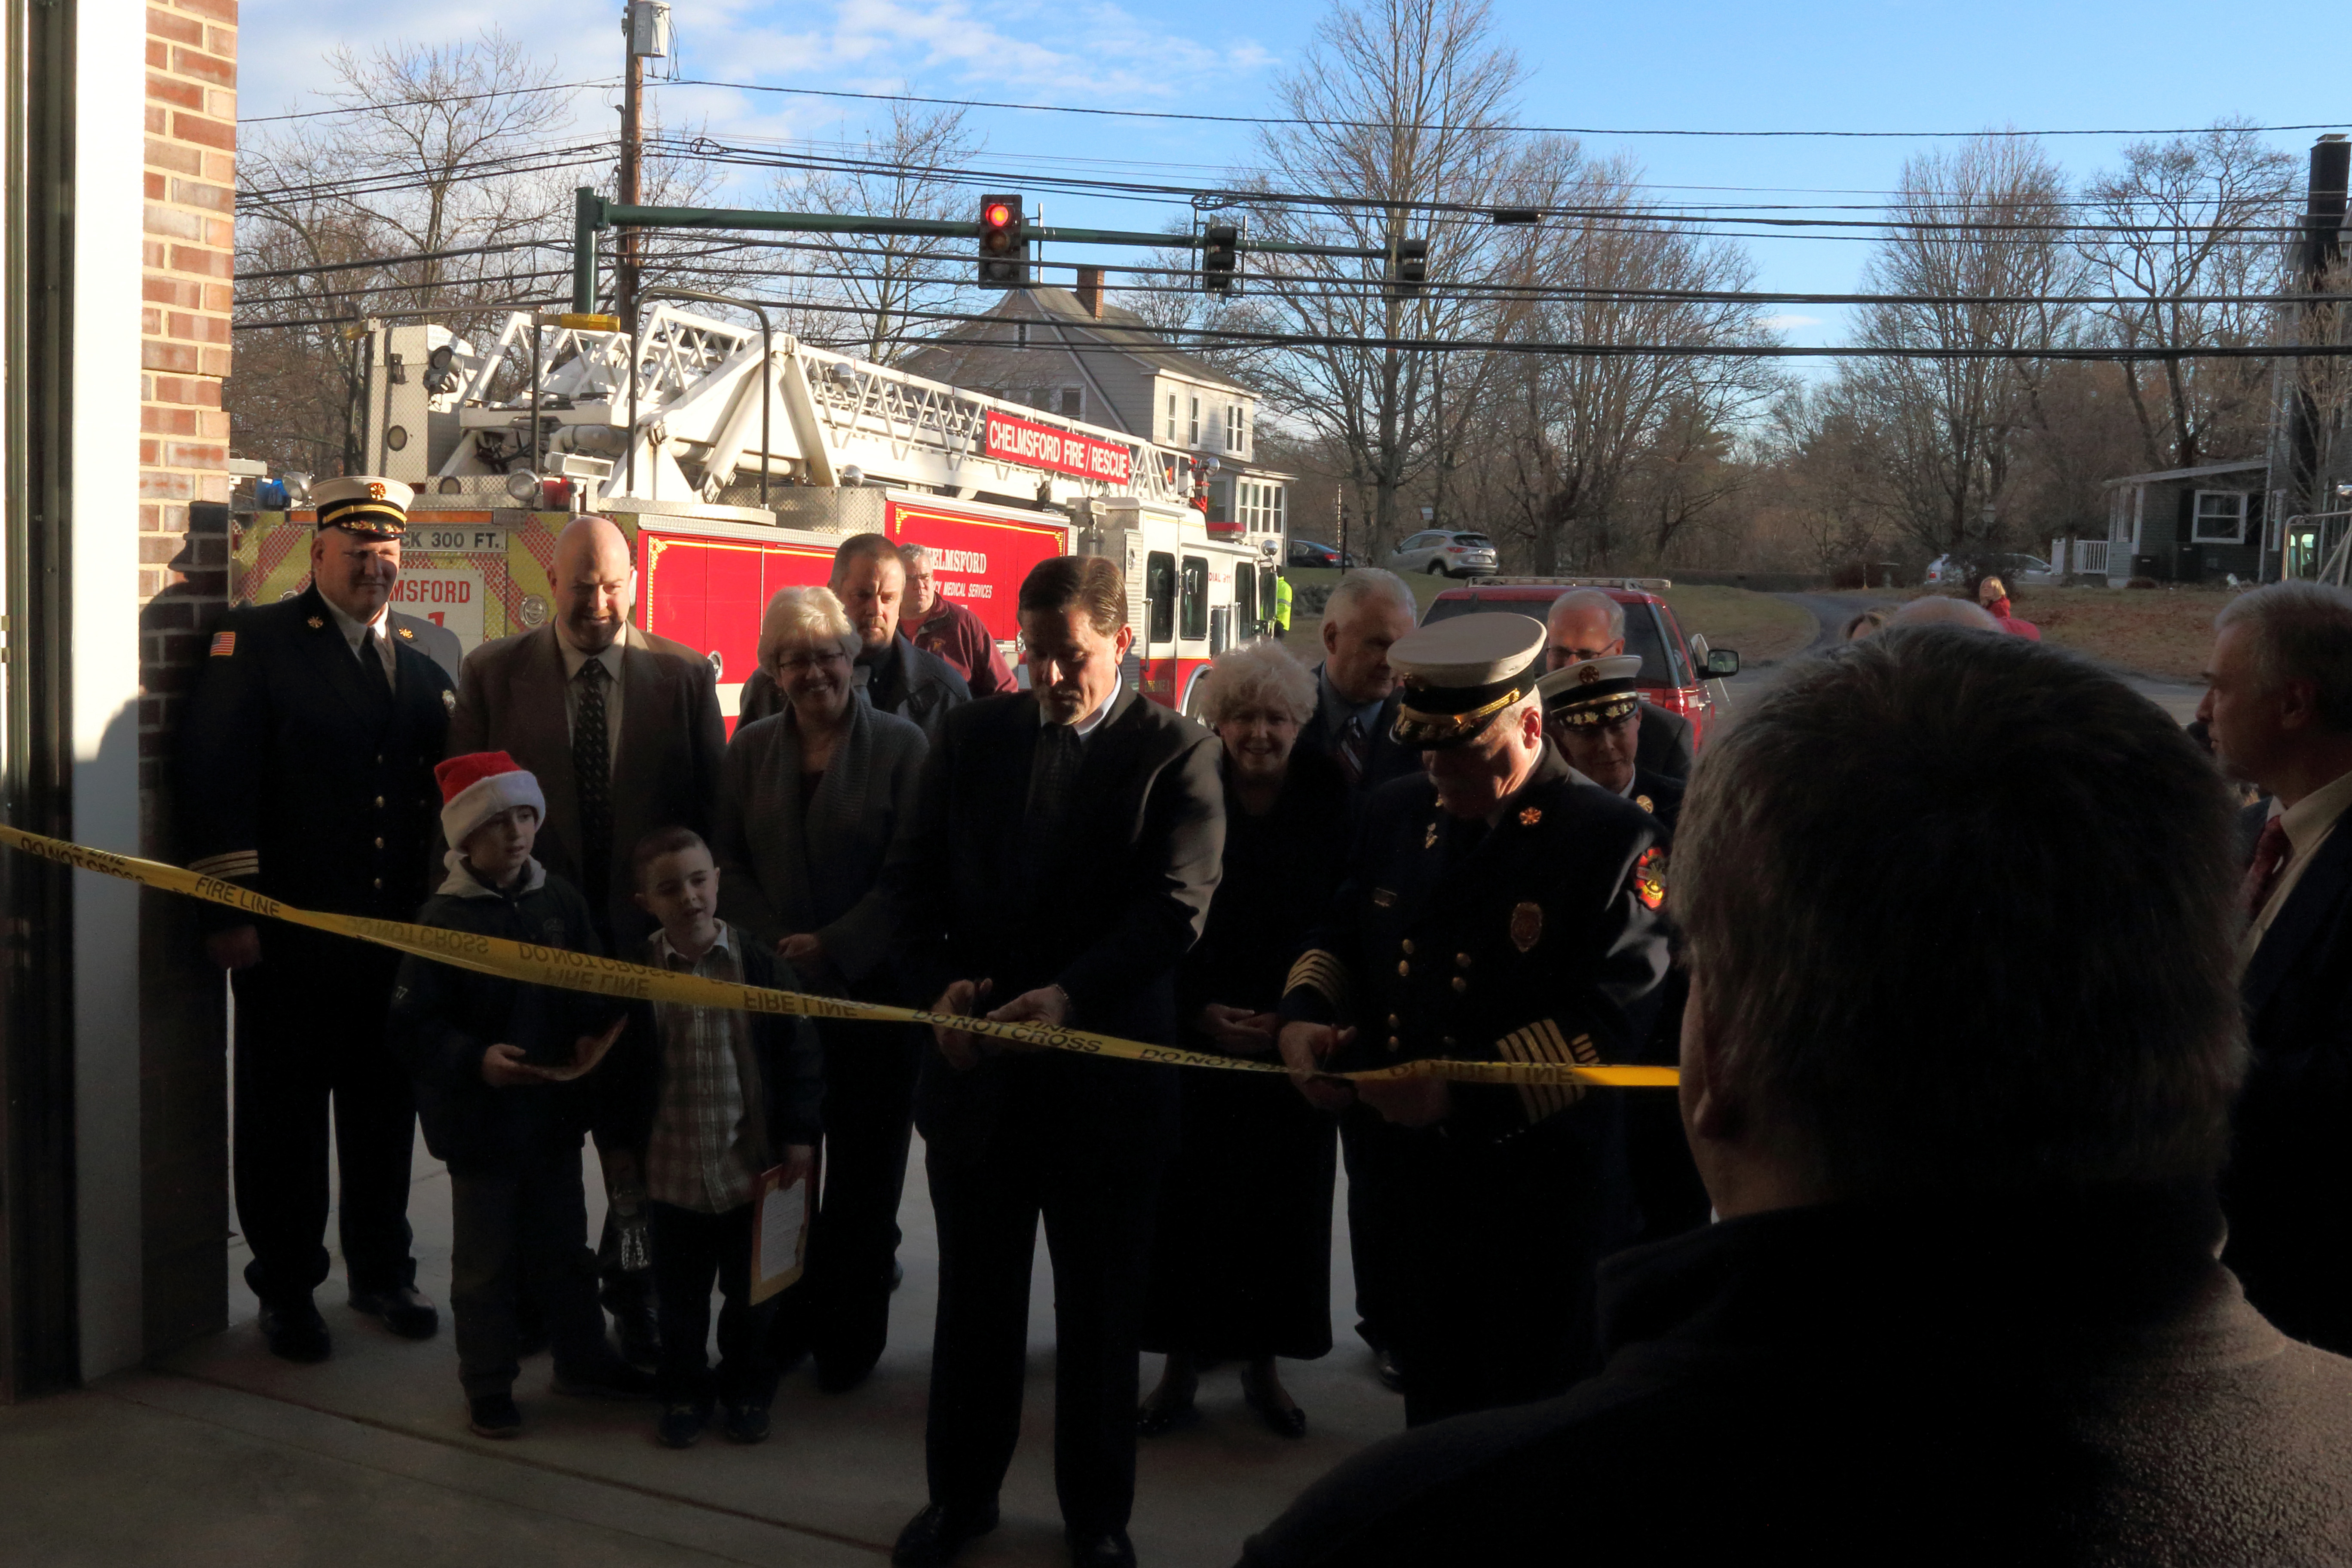 Fire Station dedication on December 12, 2014